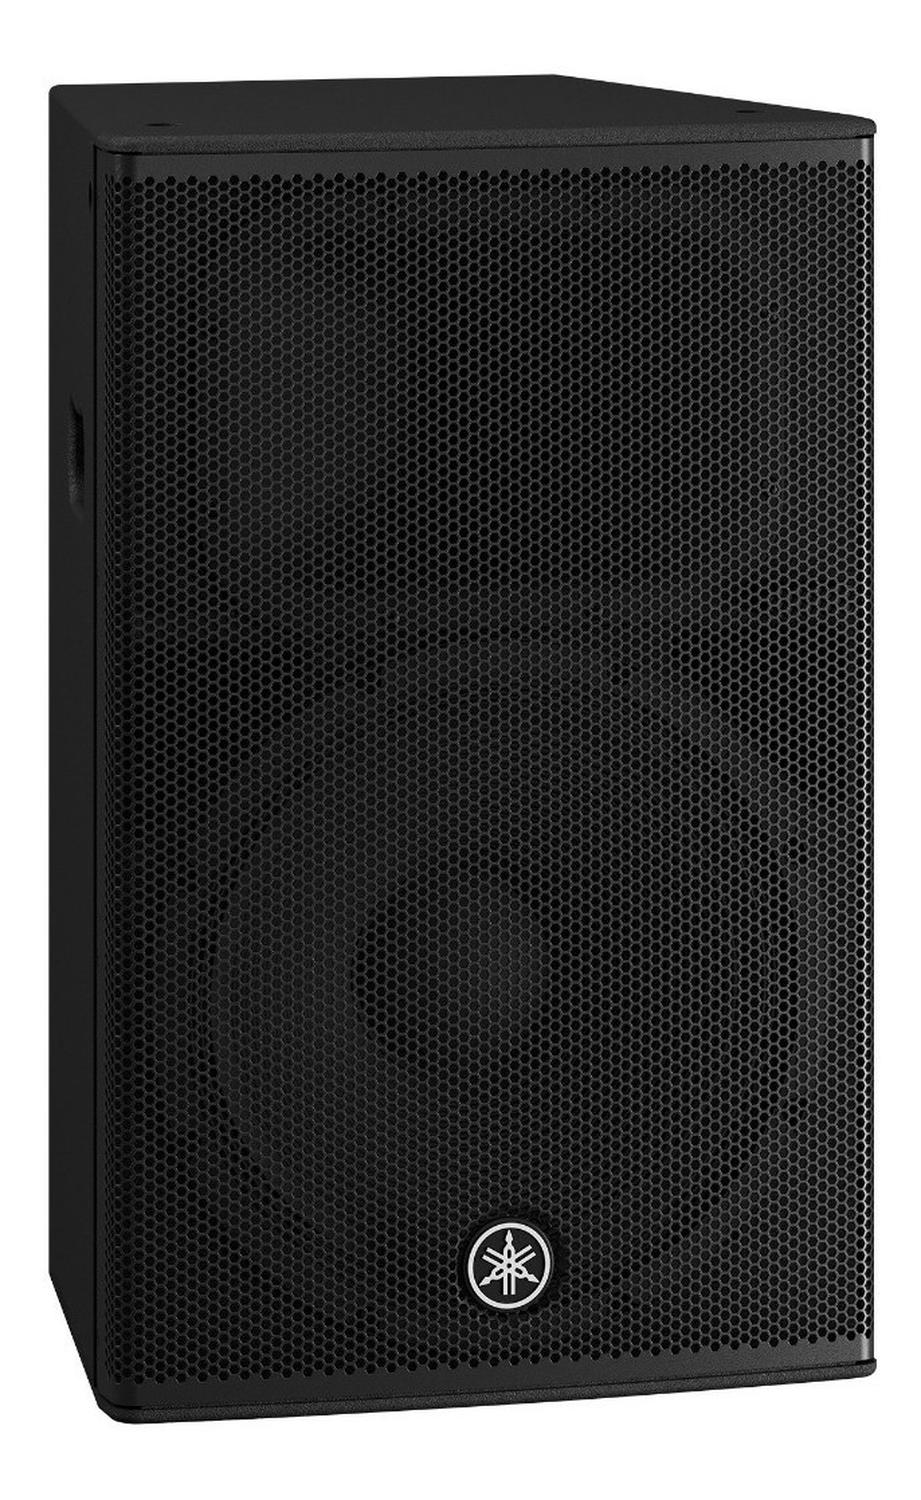 Torre Audio Yamaha Dhr15 Y Dxs15 Mkii 1000w 131db Con soporte